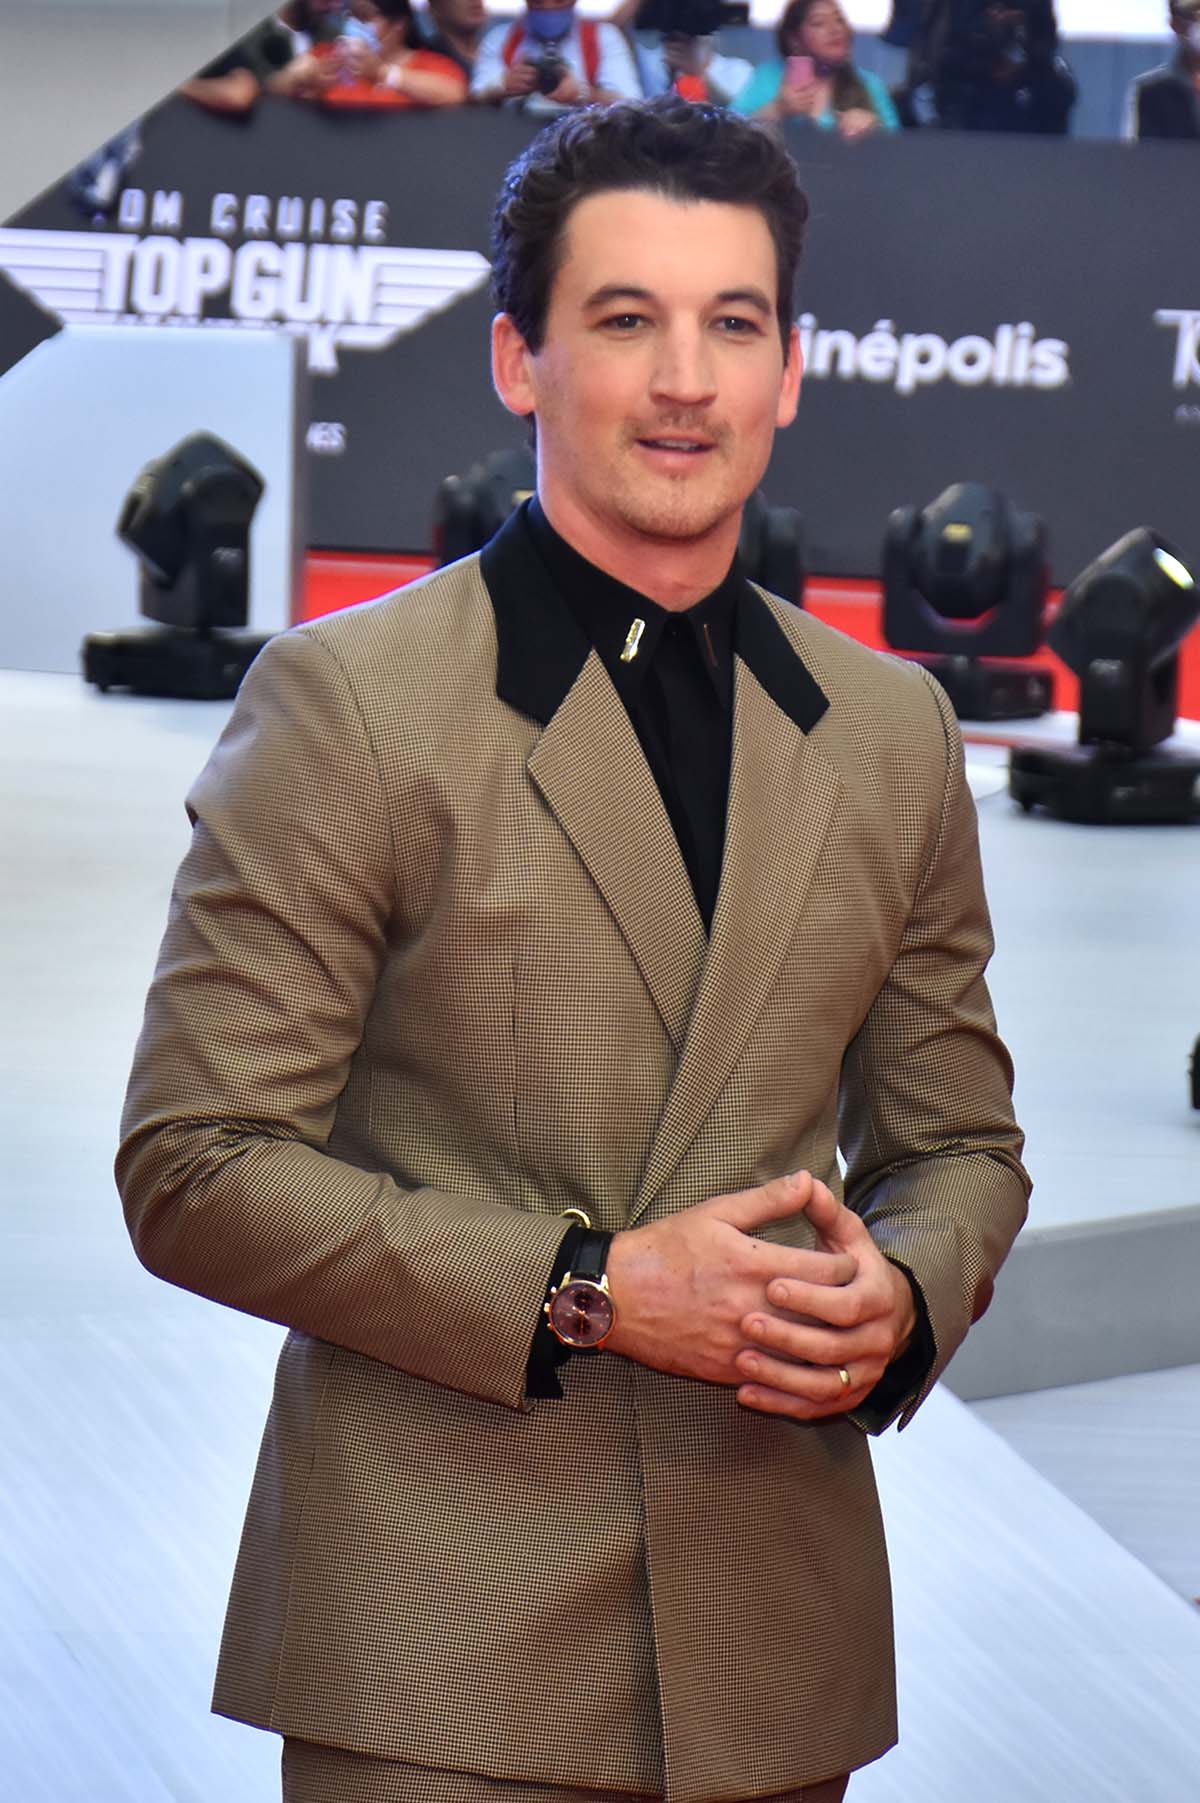 Top Gun: Maverick' Photoshopped Miles Teller Mustache for Tom Cruise